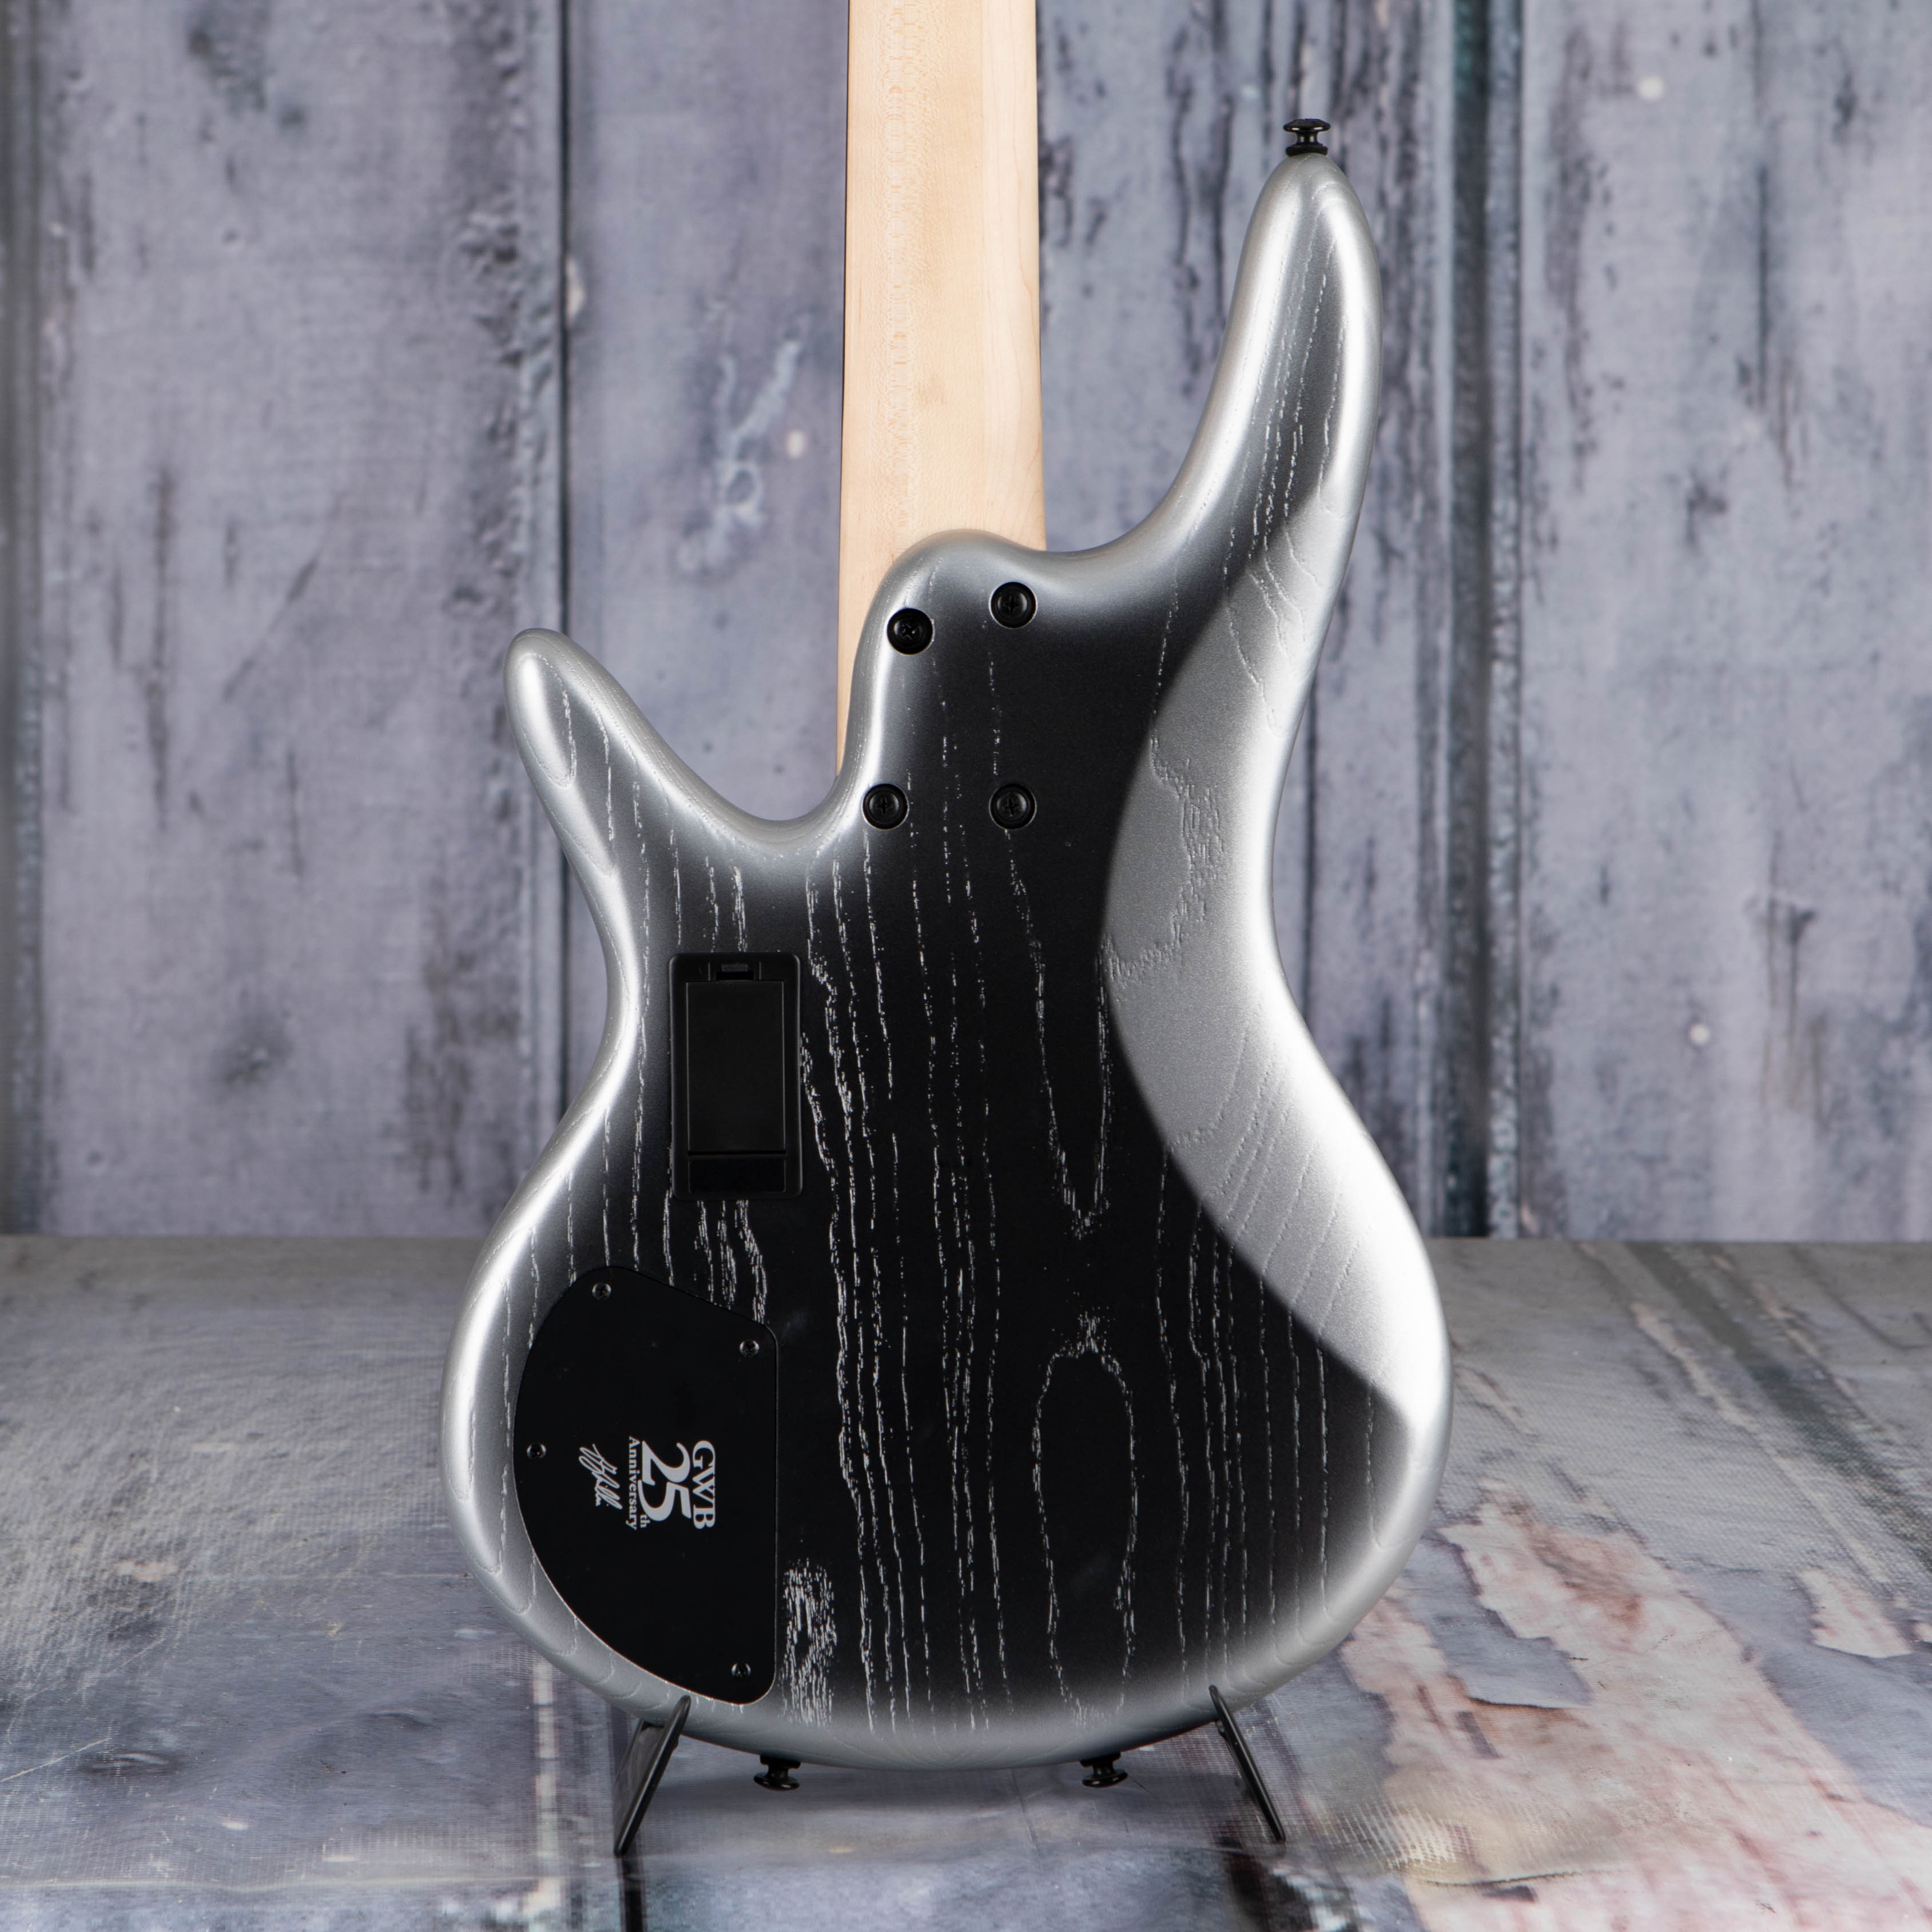 Ibanez Premium Gary Willis Signature Fretless 5-String Electric Bass Guitar, Silver Wave Burst Flat, back closeup